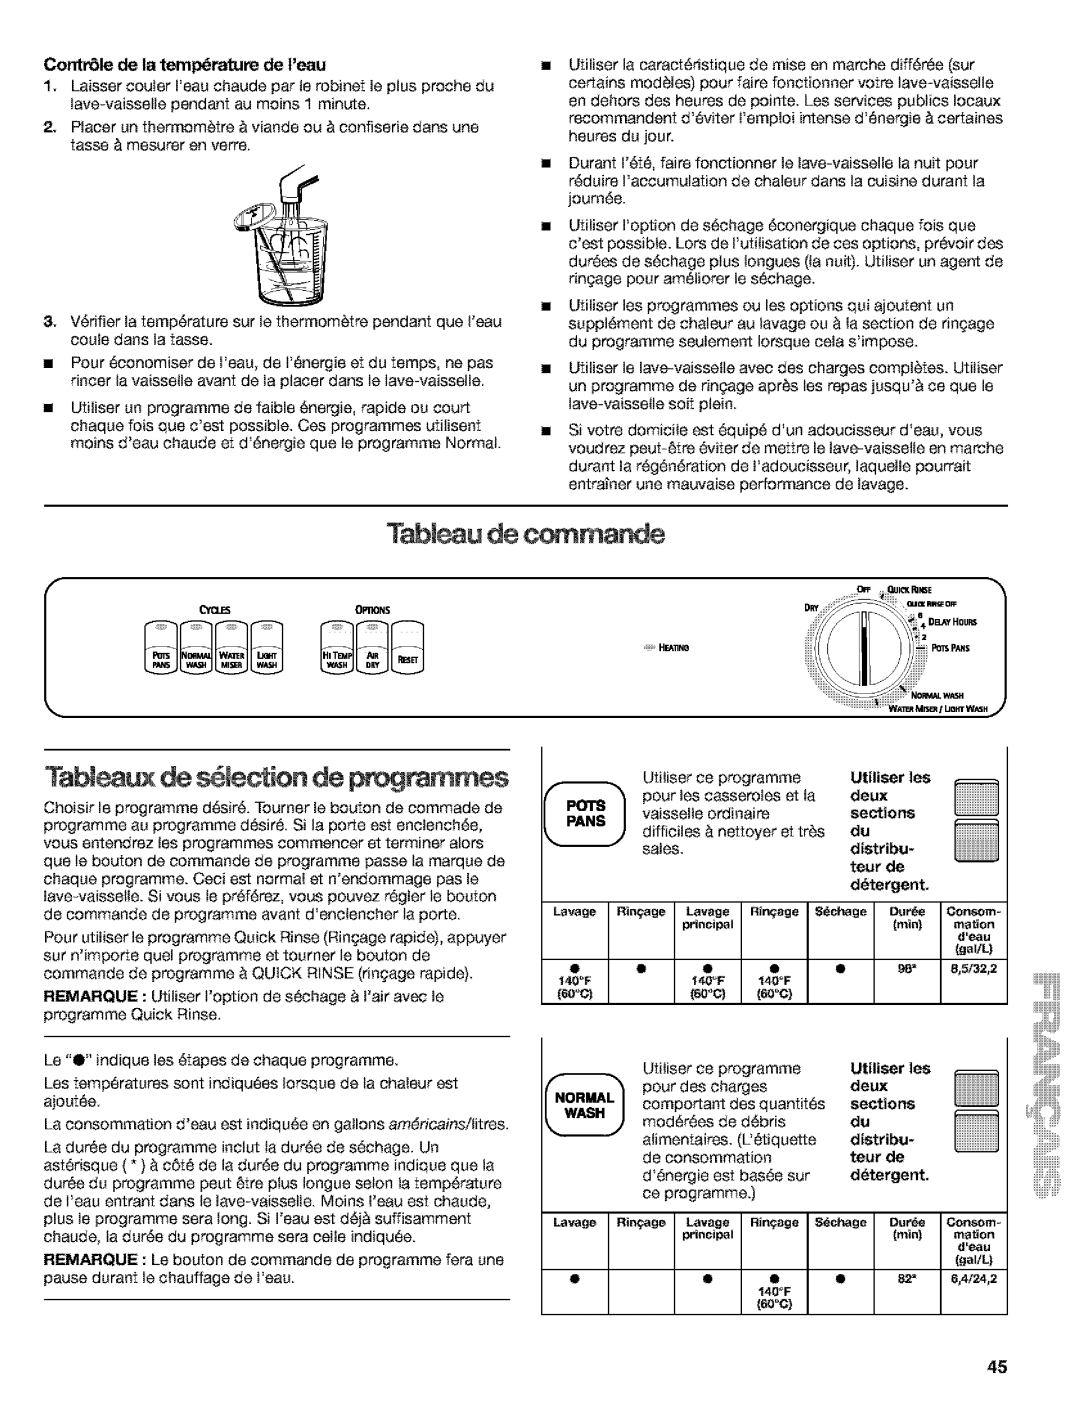 Kenmore 665.15522 manual TabJeau de cornmande, TabJea de s lec ion de programrnes, Uliliser lee, Pots, sections, distribu 